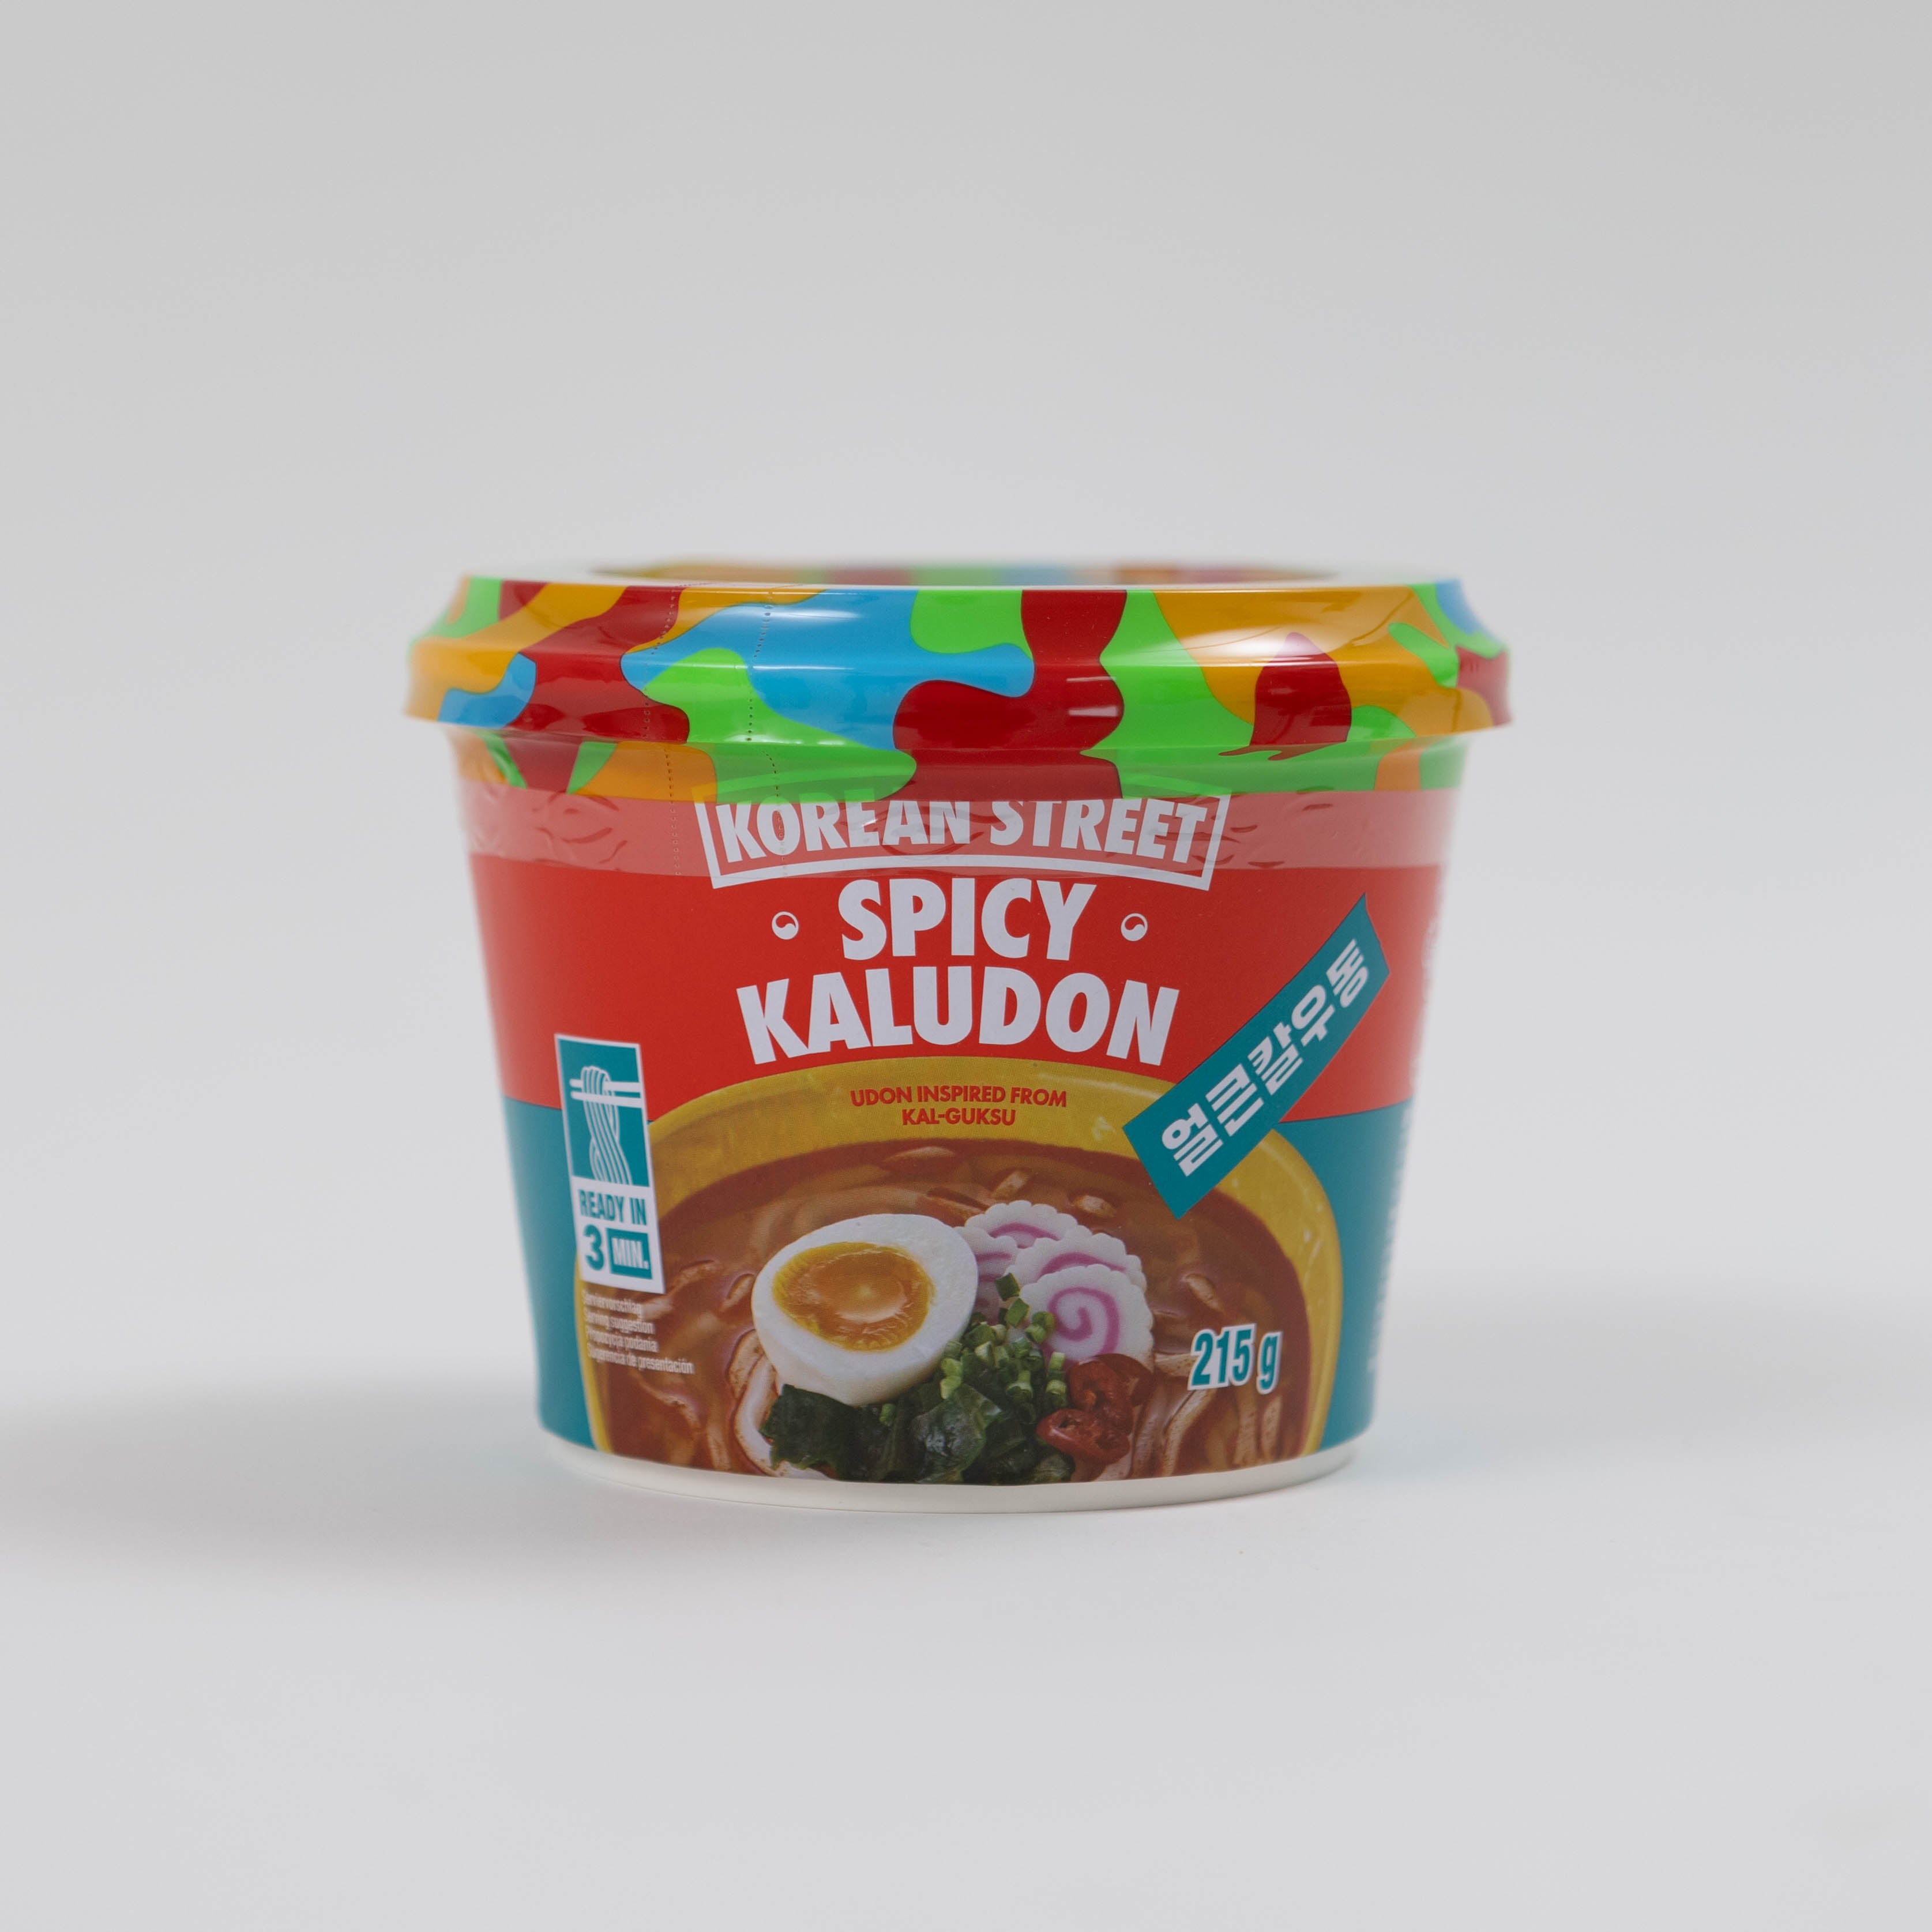 kaludon spicy korean street asiatische lebensmittel asiashop dinese.de onlineshop